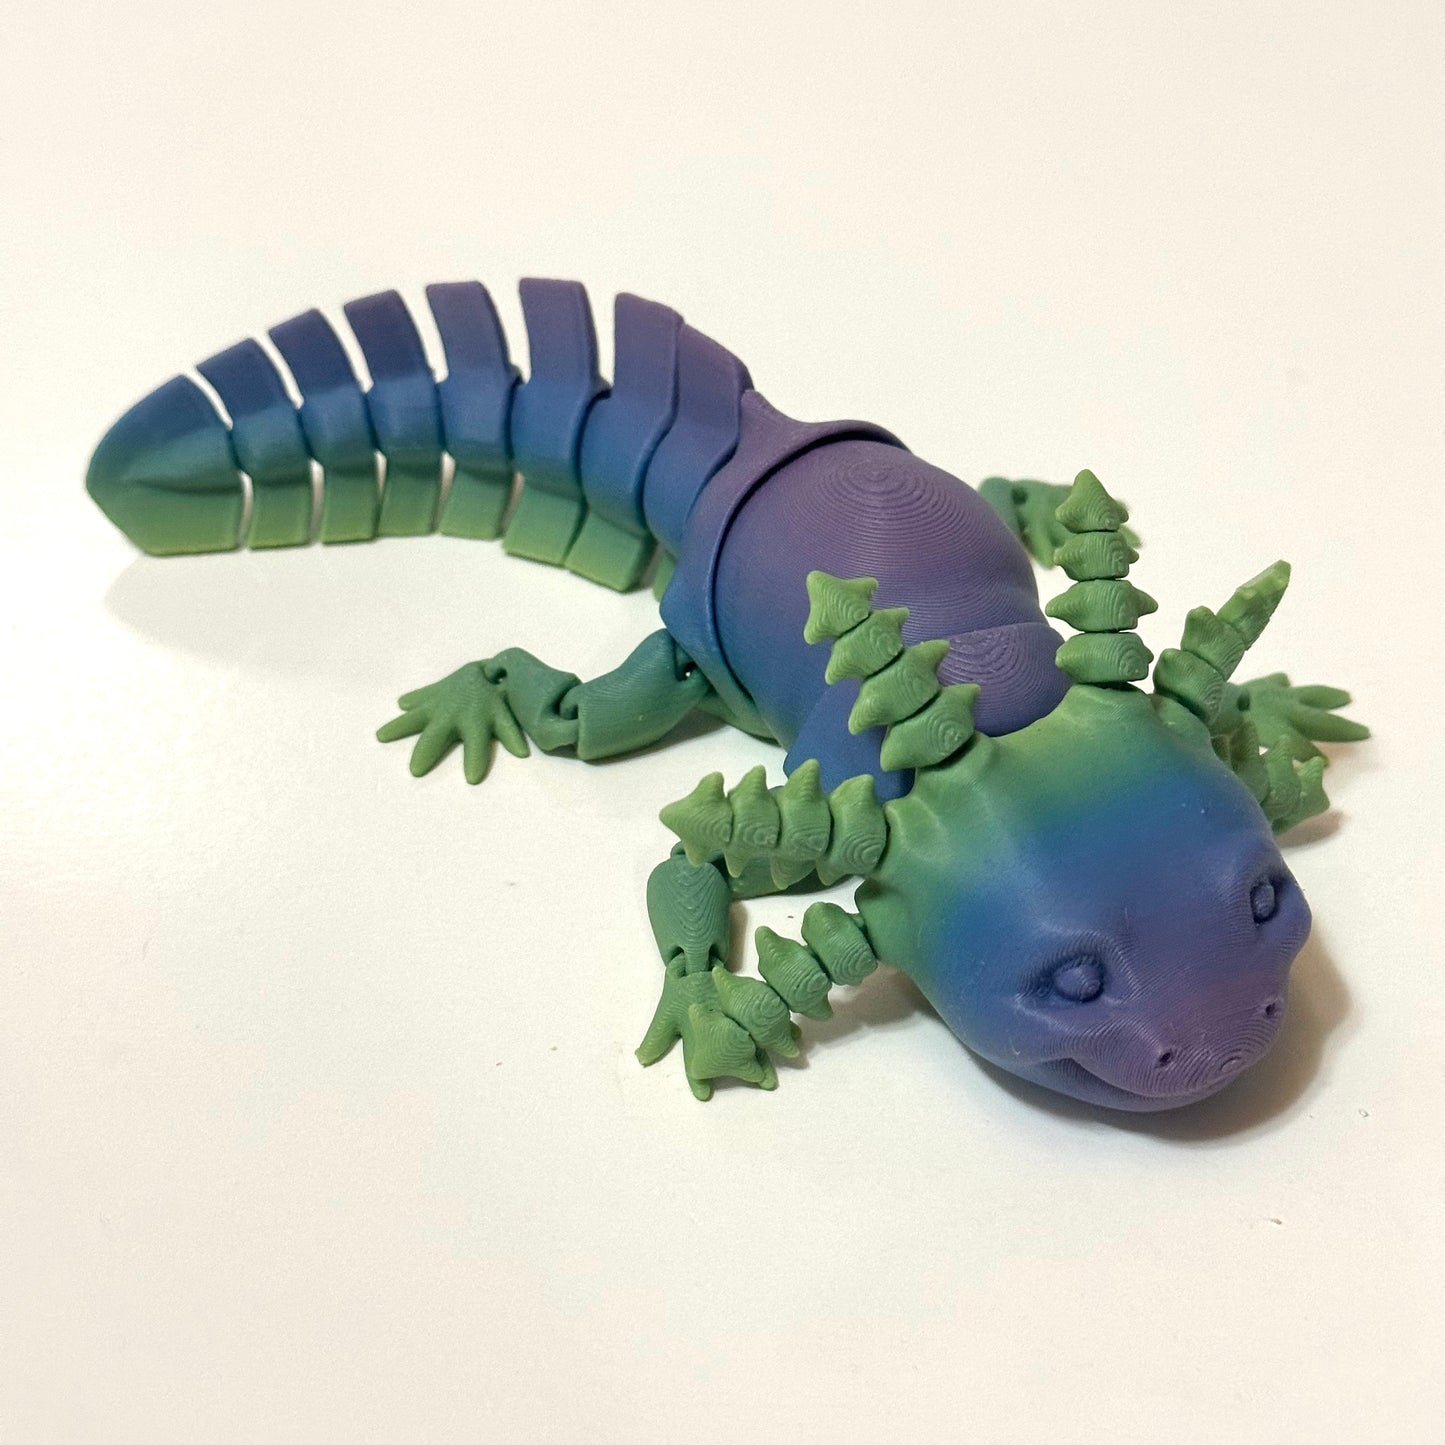 Axolotl - Fully Articulating 3D Printed Figurine